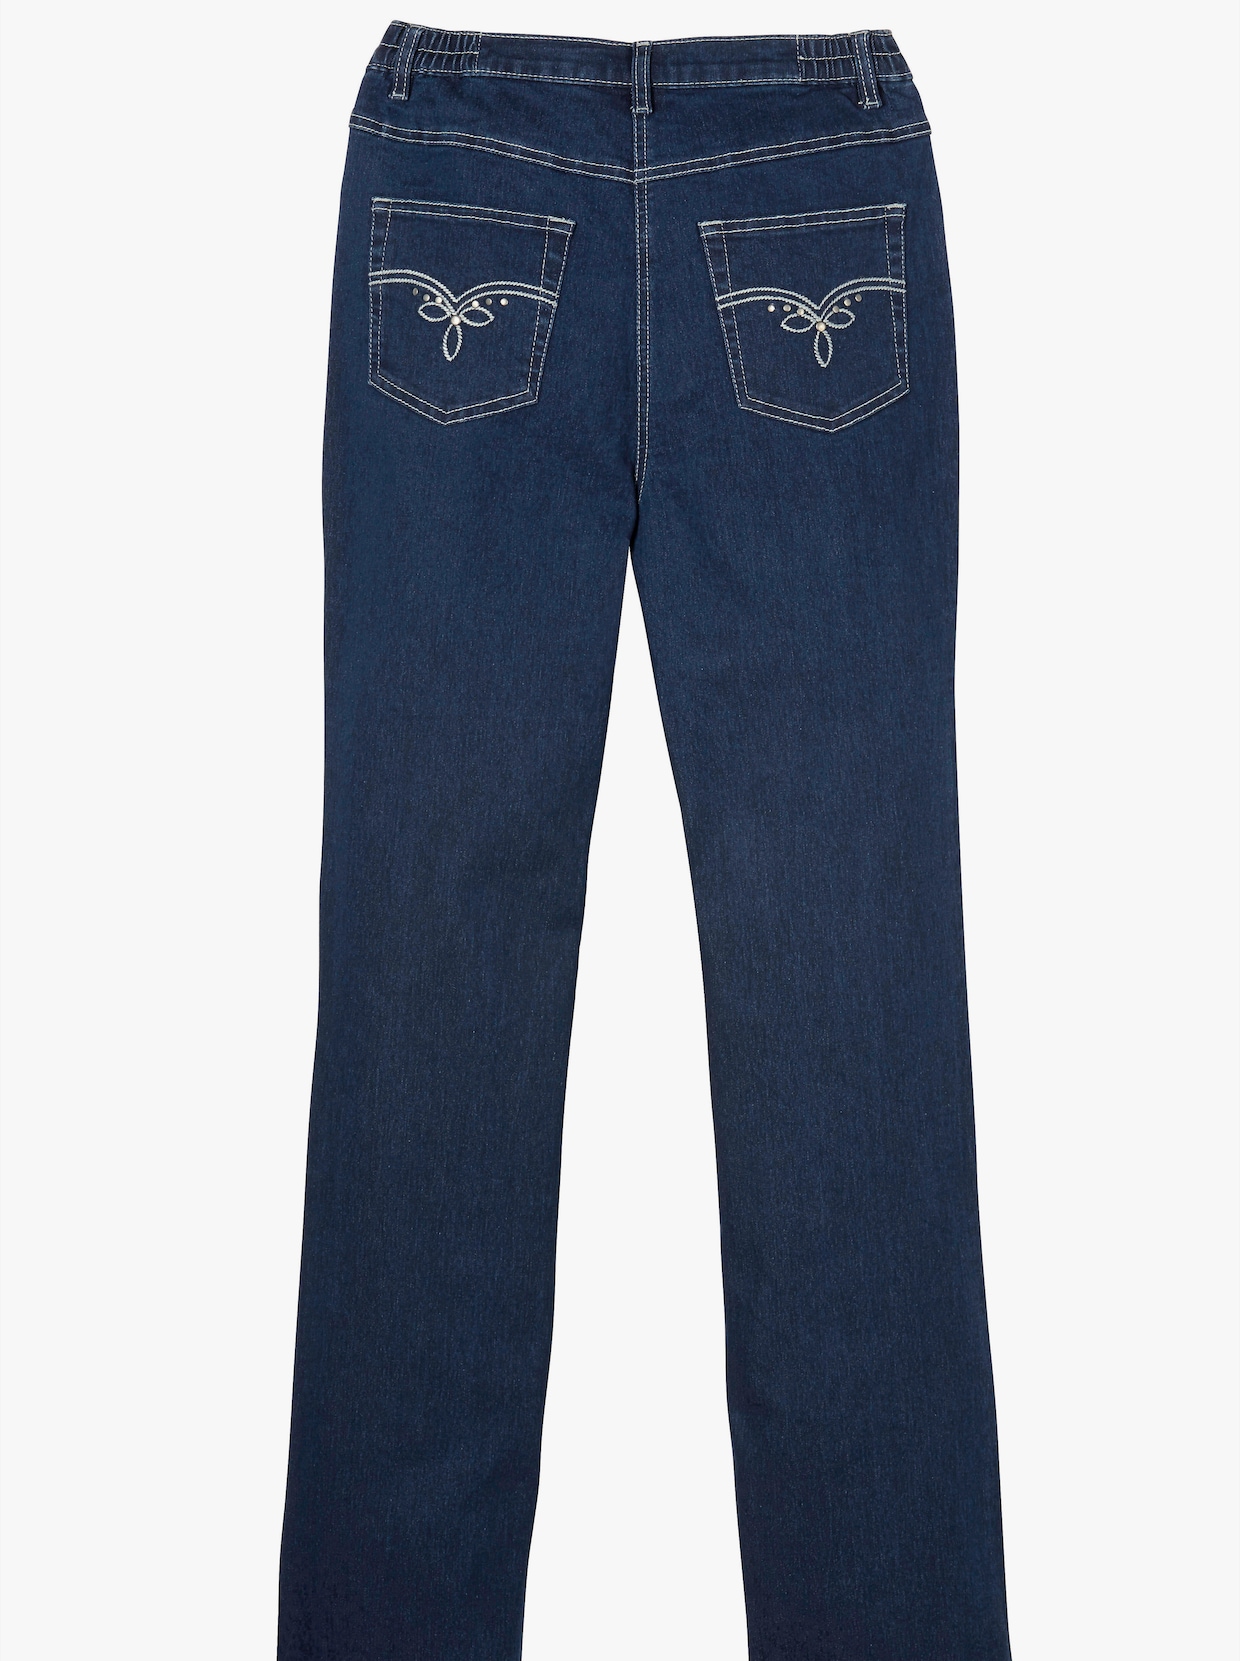 5-ficks jeans - blue-stone-washed